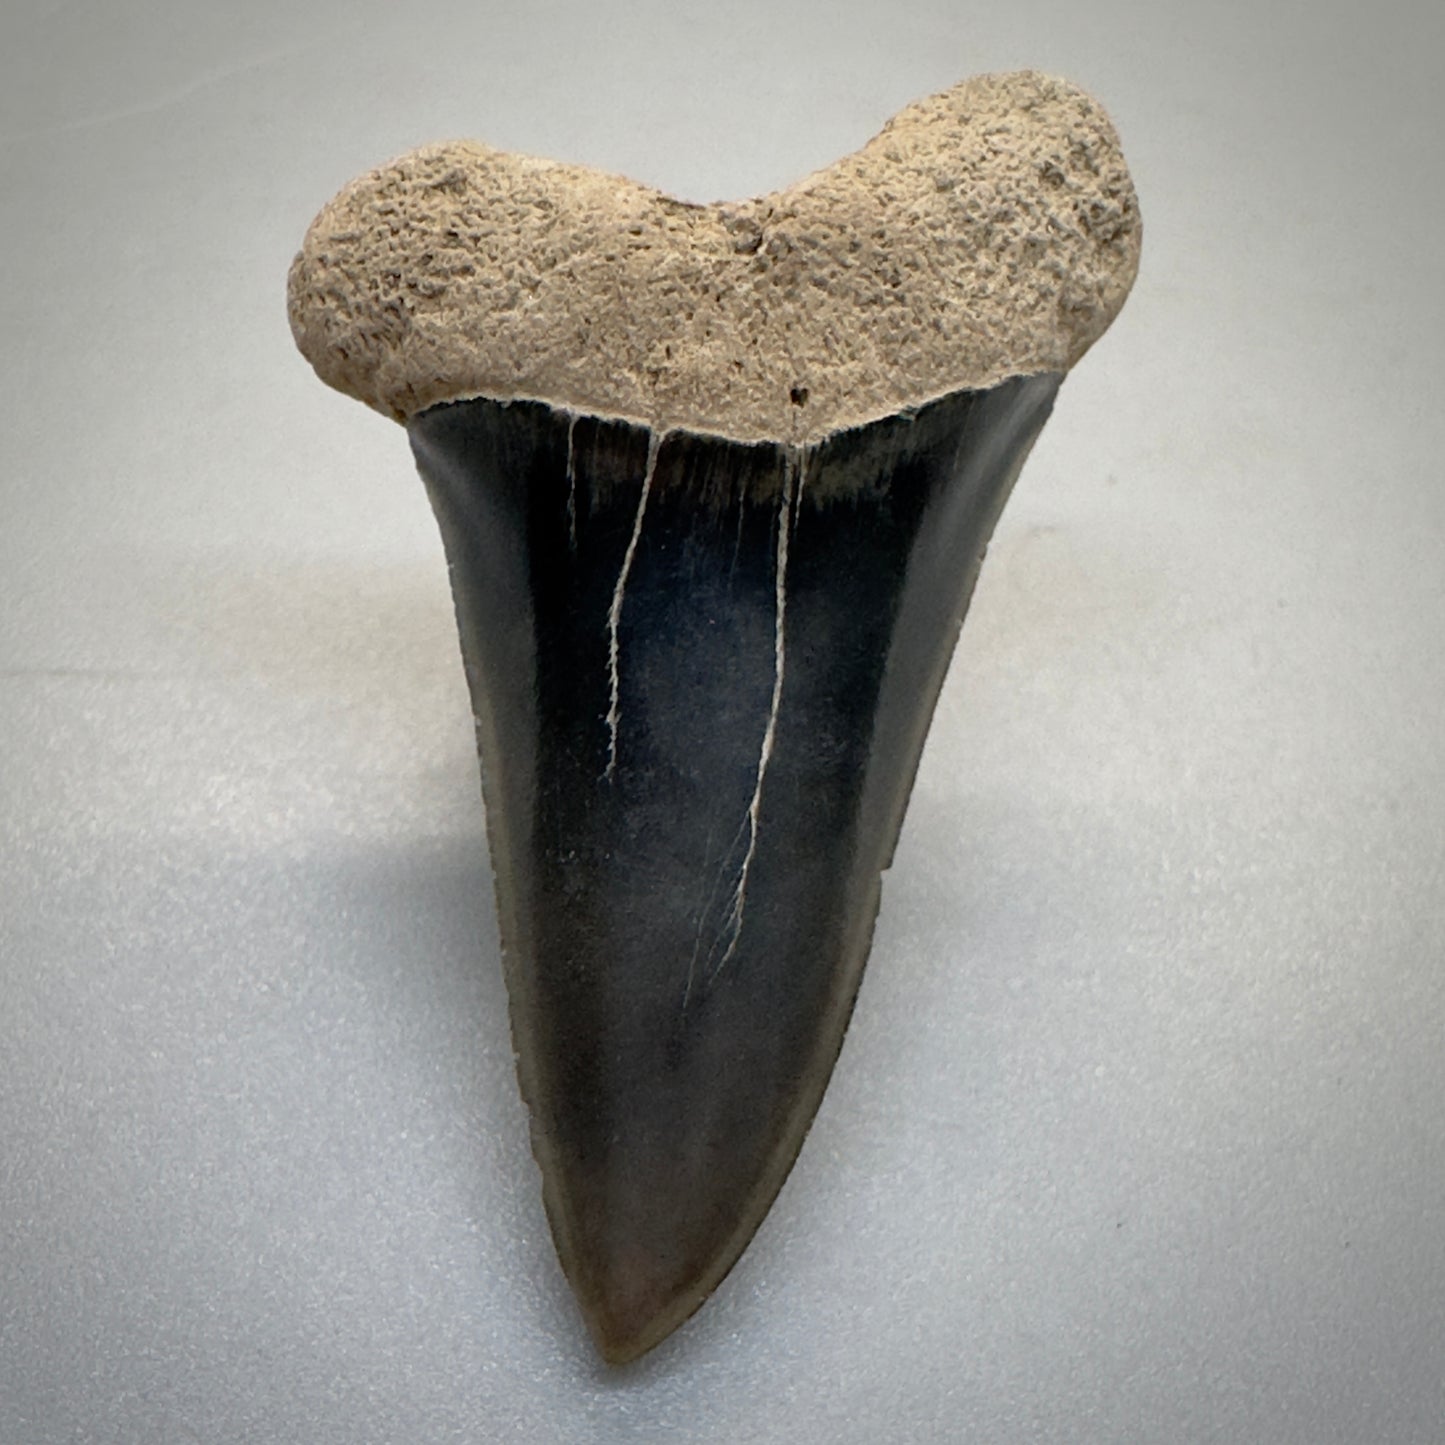 Dark colors 1.54 inches Extinct Longfin Mako - Isurus retroflexus Shark tooth from Southeast, USA M519 front down